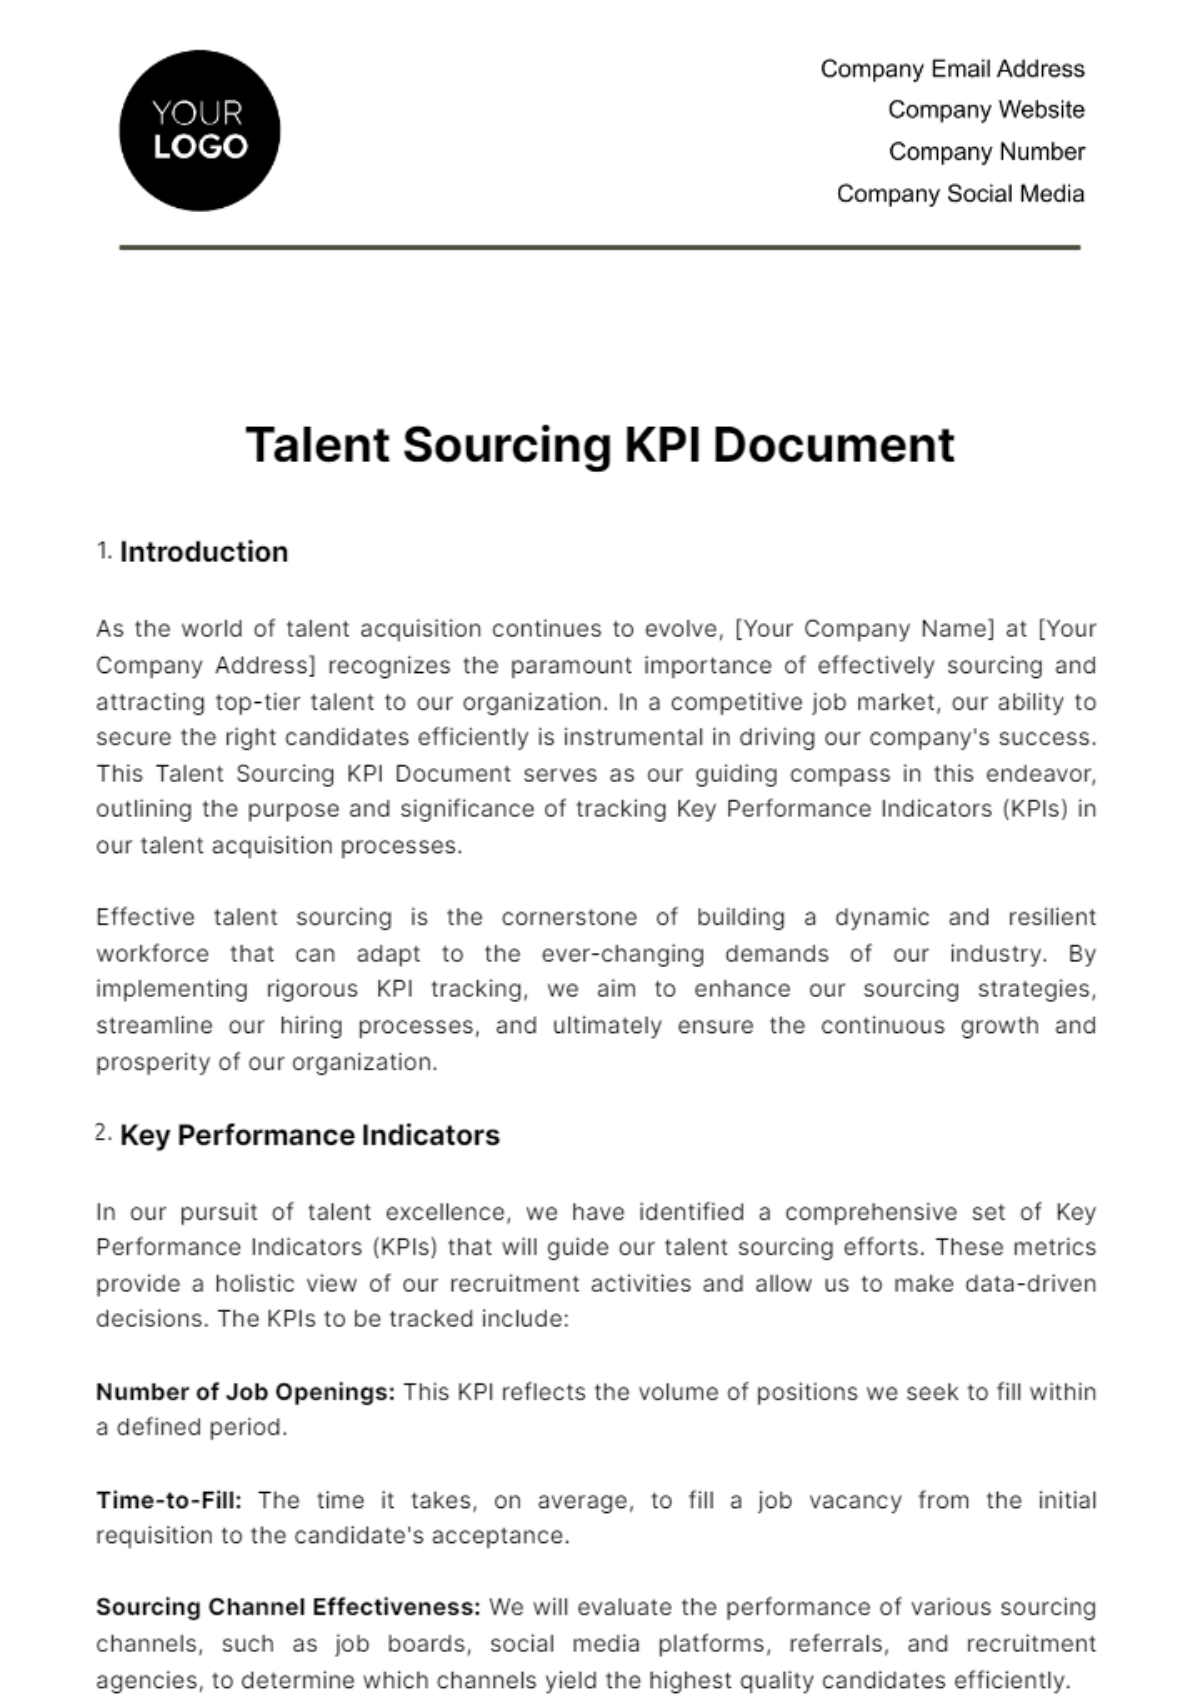 Talent Sourcing KPI Document HR Template